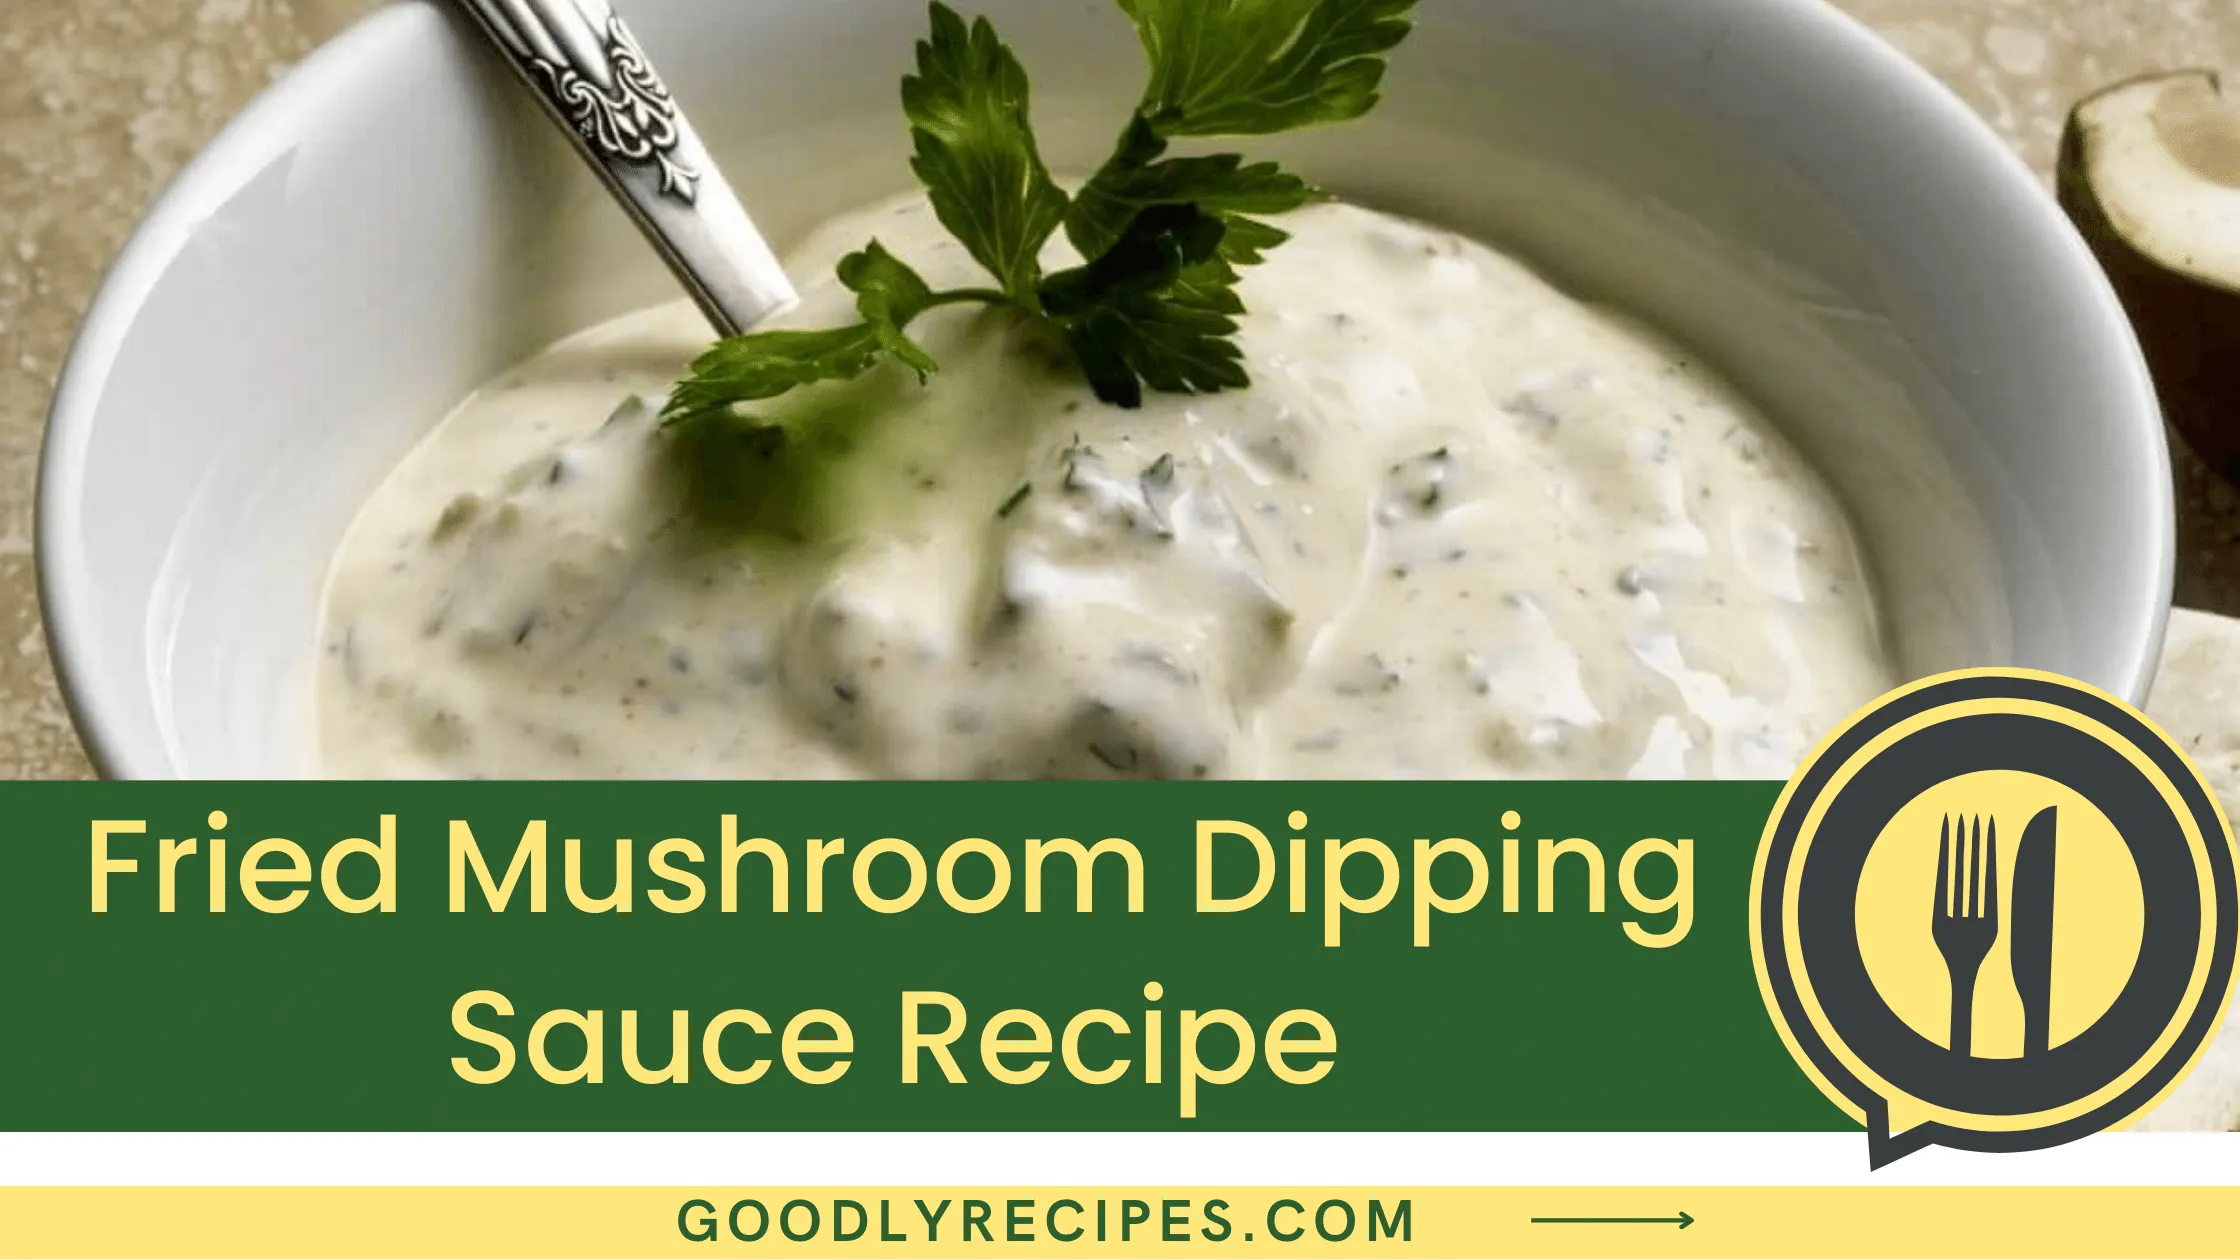 Fried Mushroom Dipping Sauce Recipe